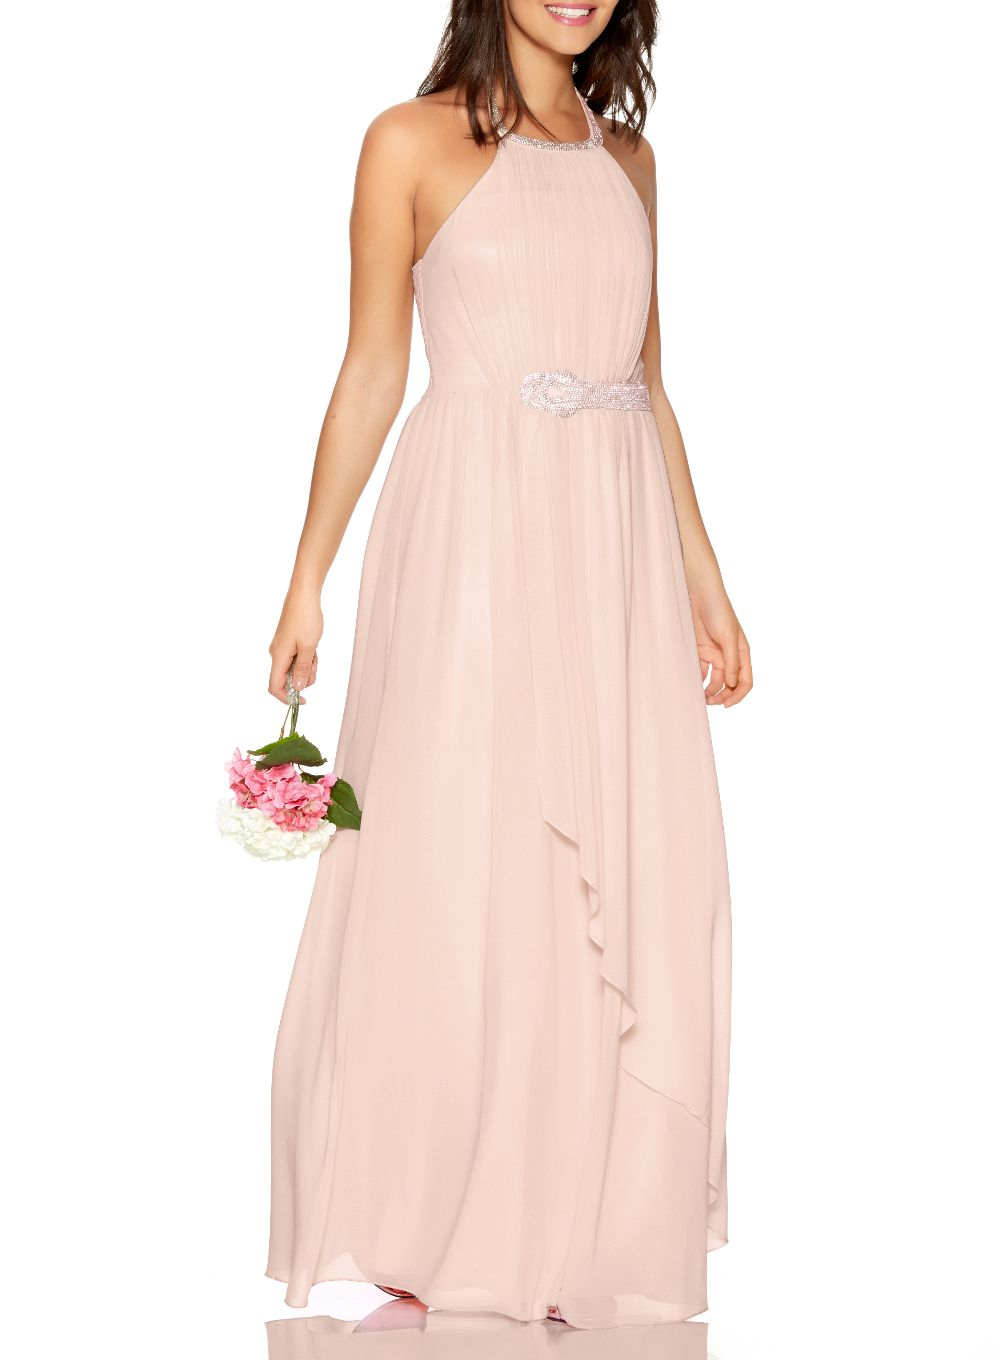  Quiz  Blush  Diamante Trim Maxi Dress  in Pink  Lyst